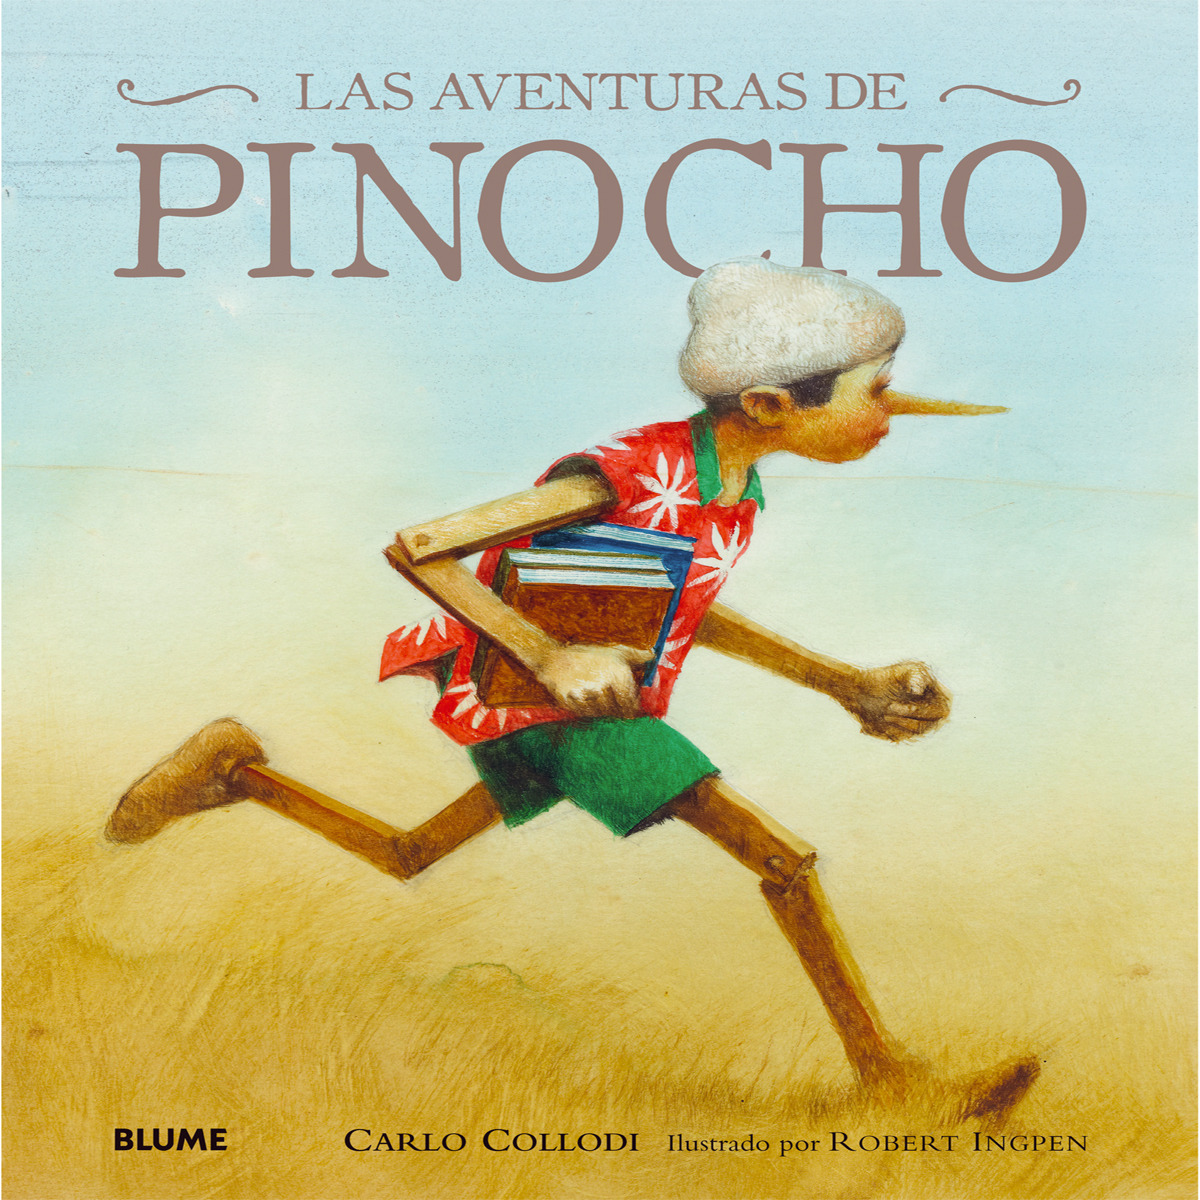 Las aventuras de Pinocho - Carlo Collodi / Robert Ingpen (il.)